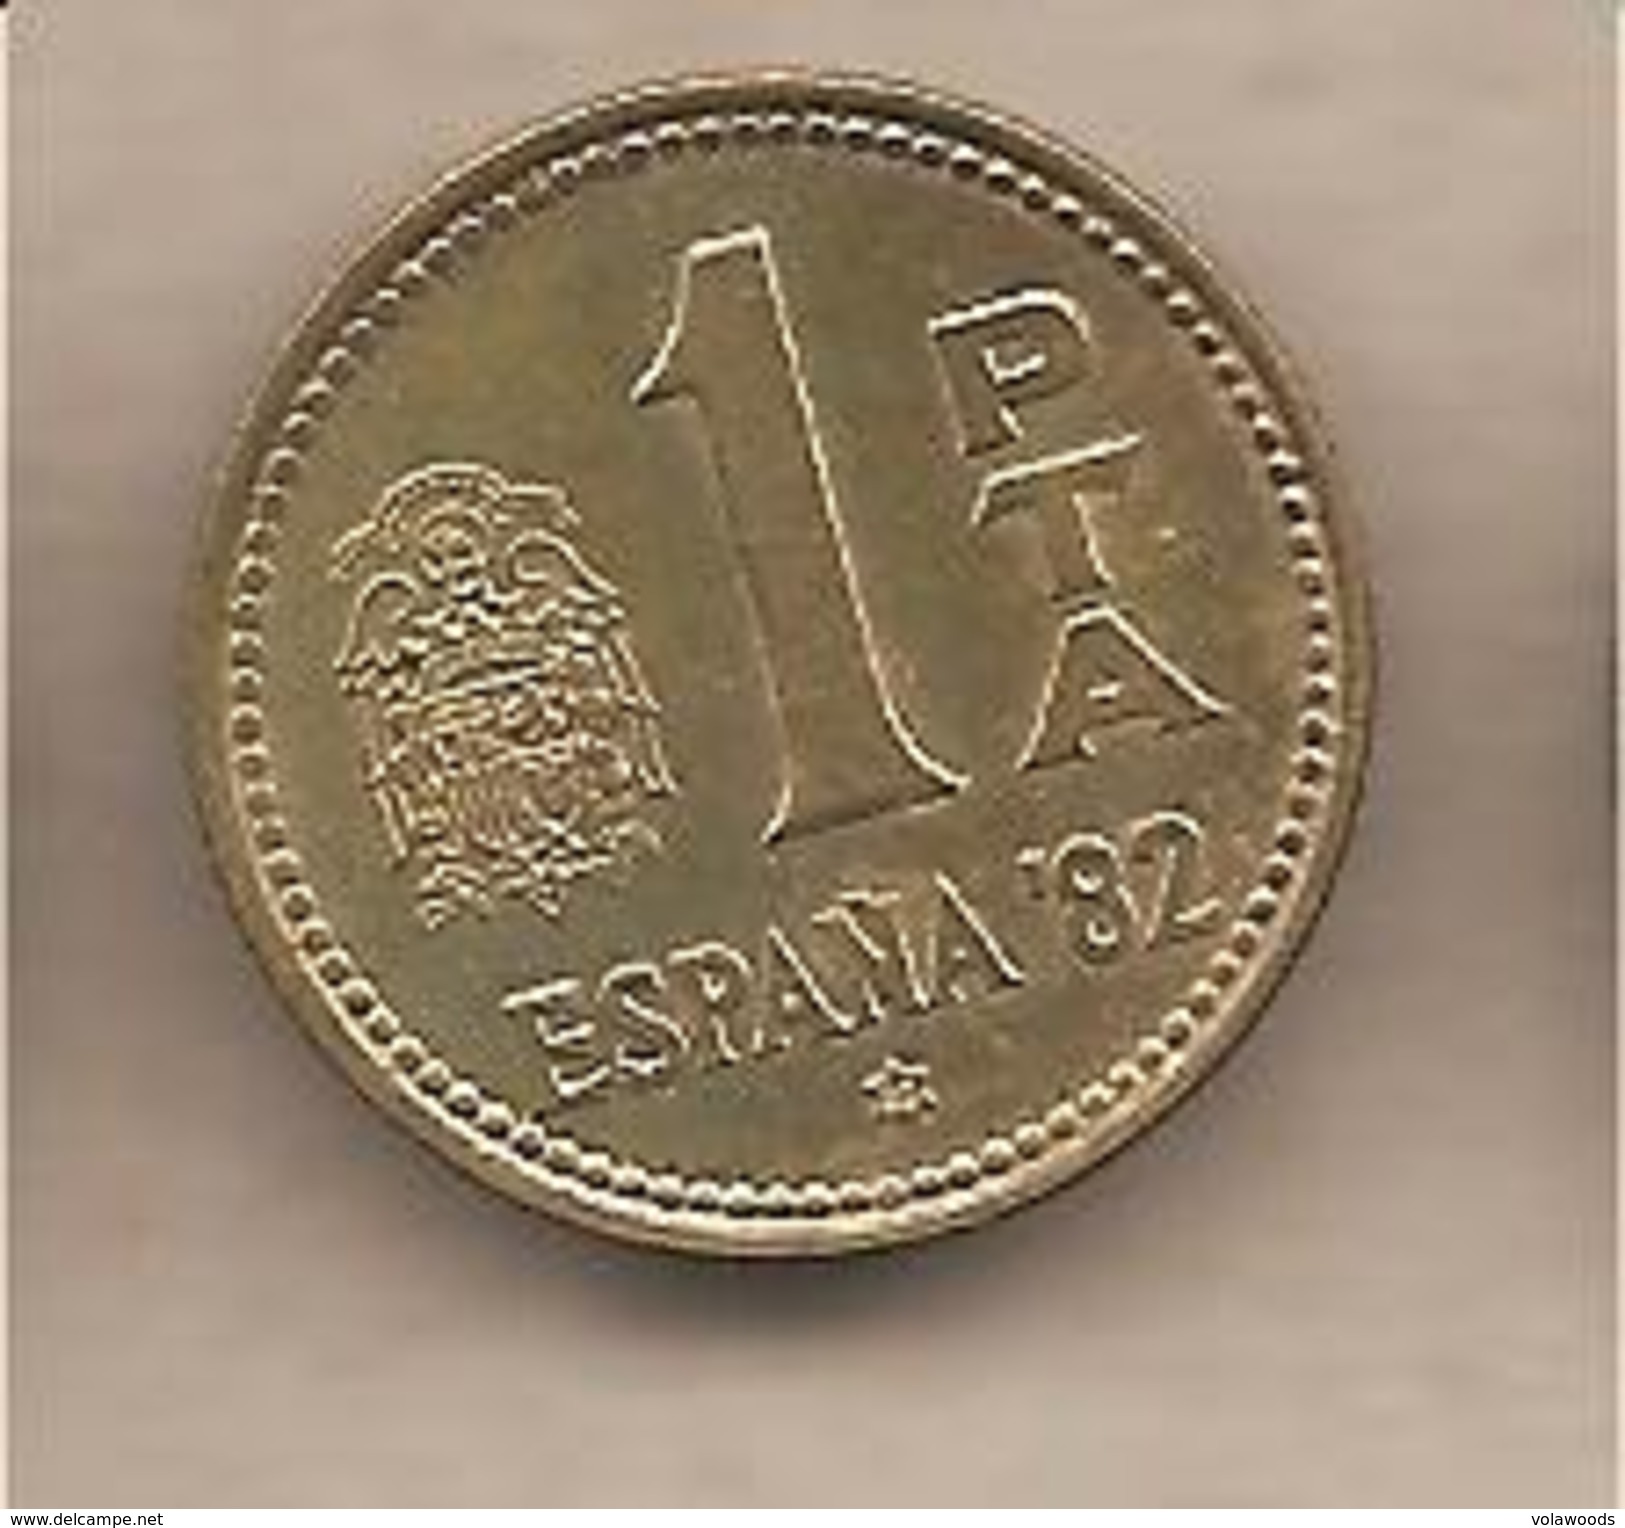 Spagna - Moneta Circolata Da 1 Peseta "Espana 82" - 1980 - 1 Peseta